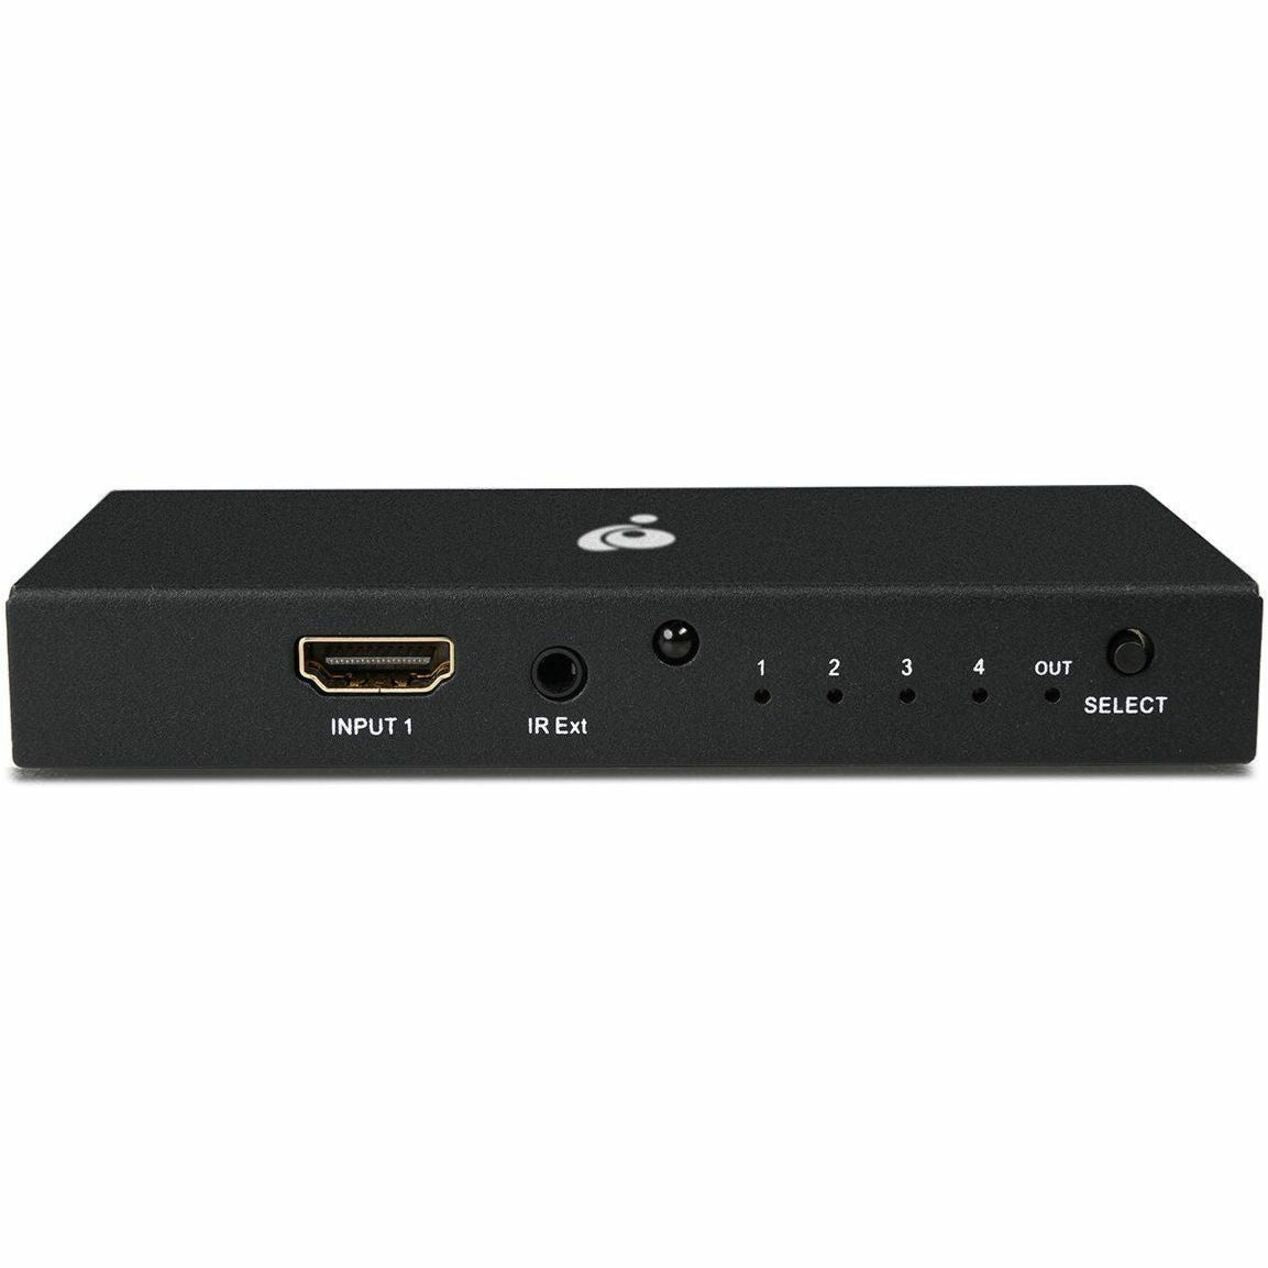 IOGEAR GHDSW8K4 4-Port 8K UltraHD HDMI Switch, USB Power Cable, IR Remote Control, Quick Start Guide, Warranty Card